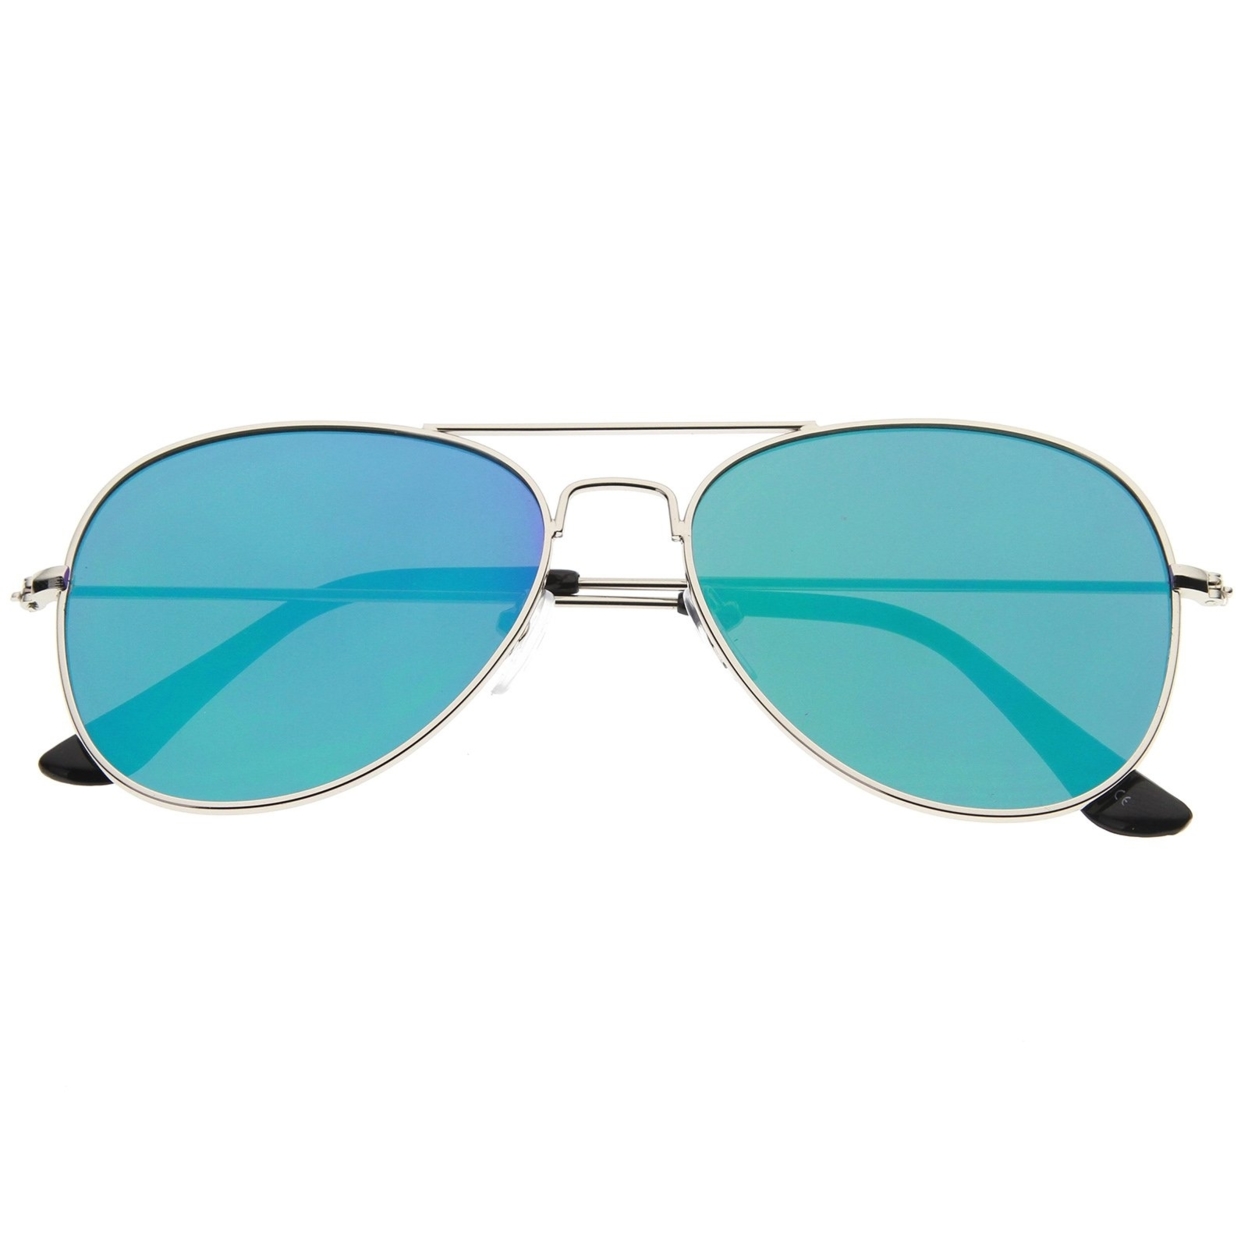 Classic Teardrop Full Metal Flash Mirrored Flat Lens Aviator Sunglasses 59mm - Silver / Blue